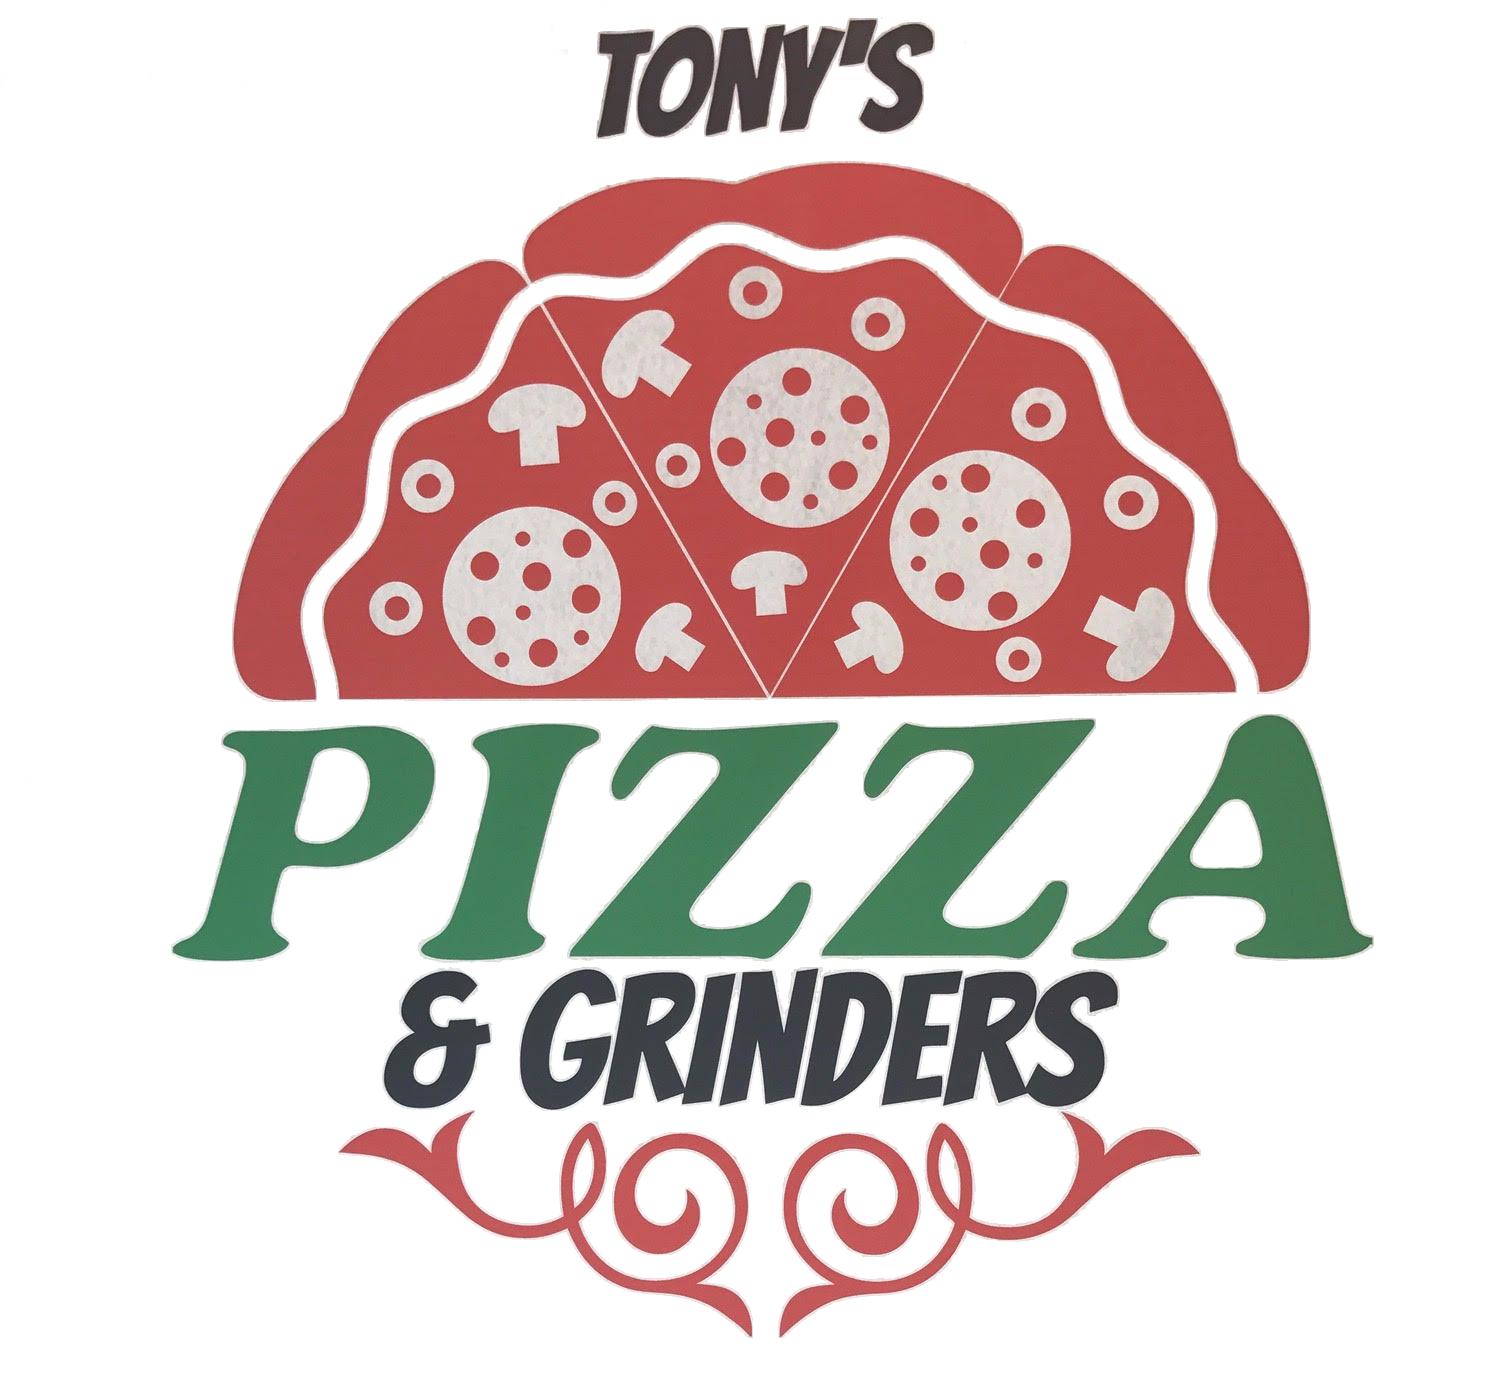 Tony's Logo - Home's Pizza & Grinders